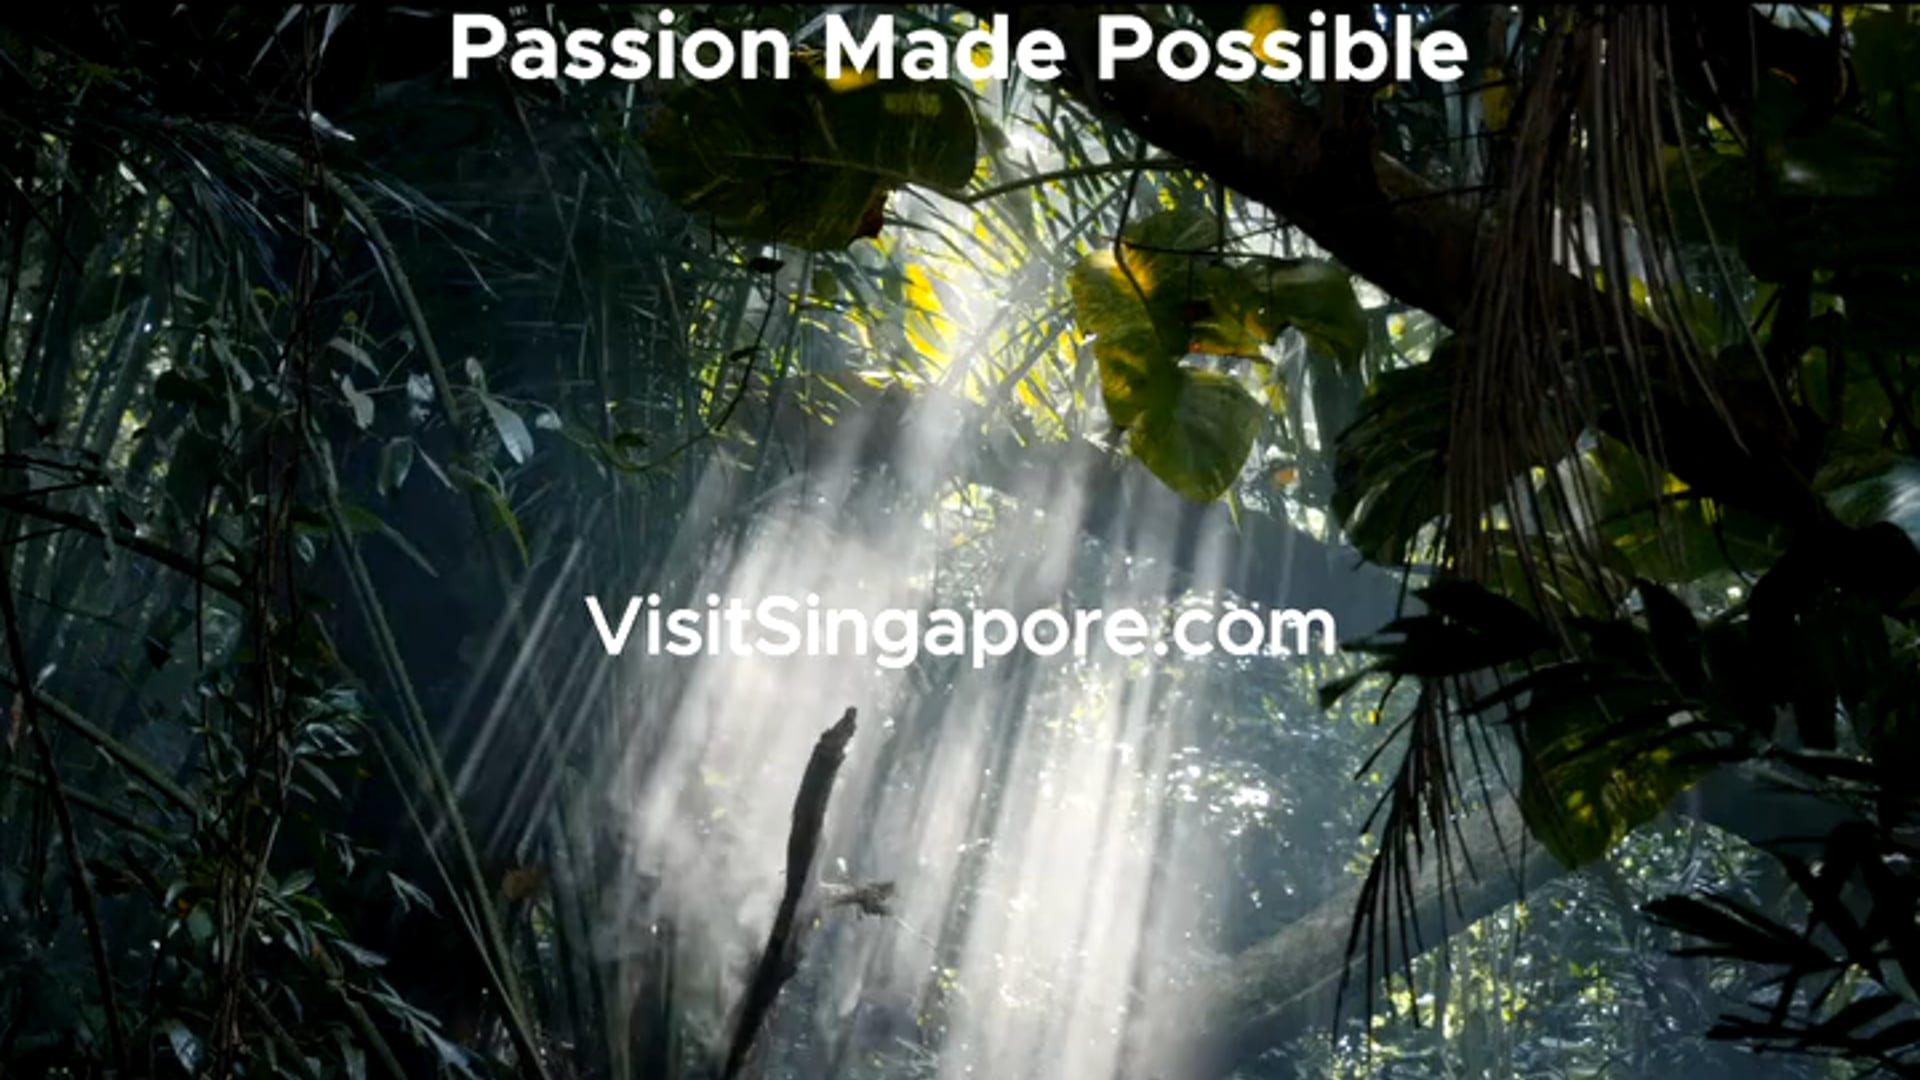 Singapore Tourist video 15 sec